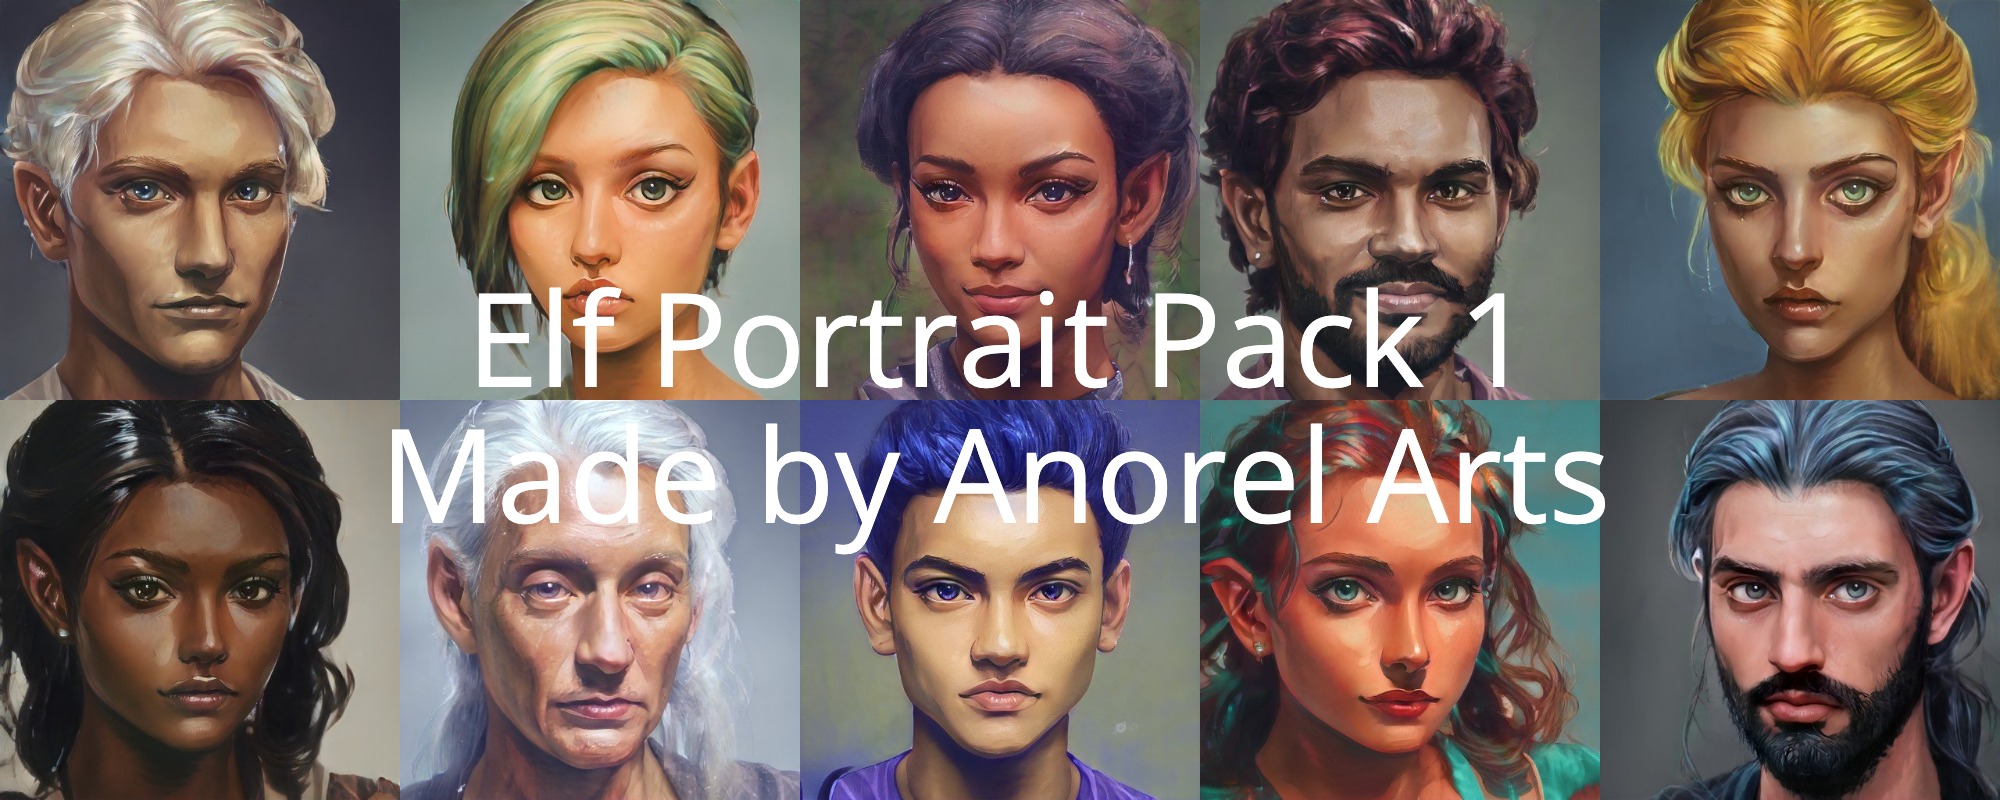 Elf Portrait Pack 1